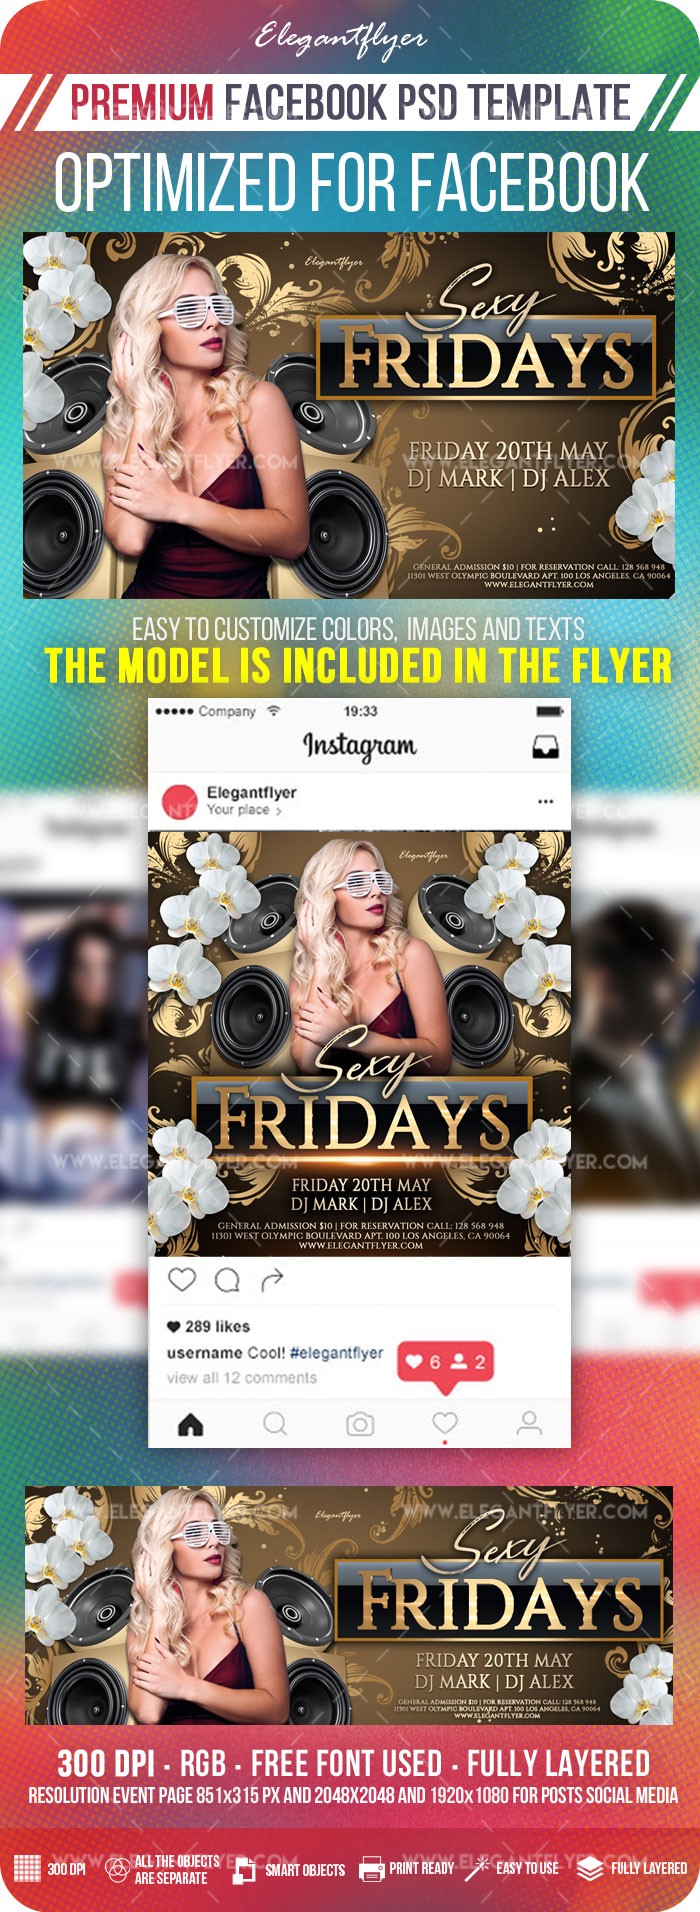 Club Sexy Fridays by ElegantFlyer